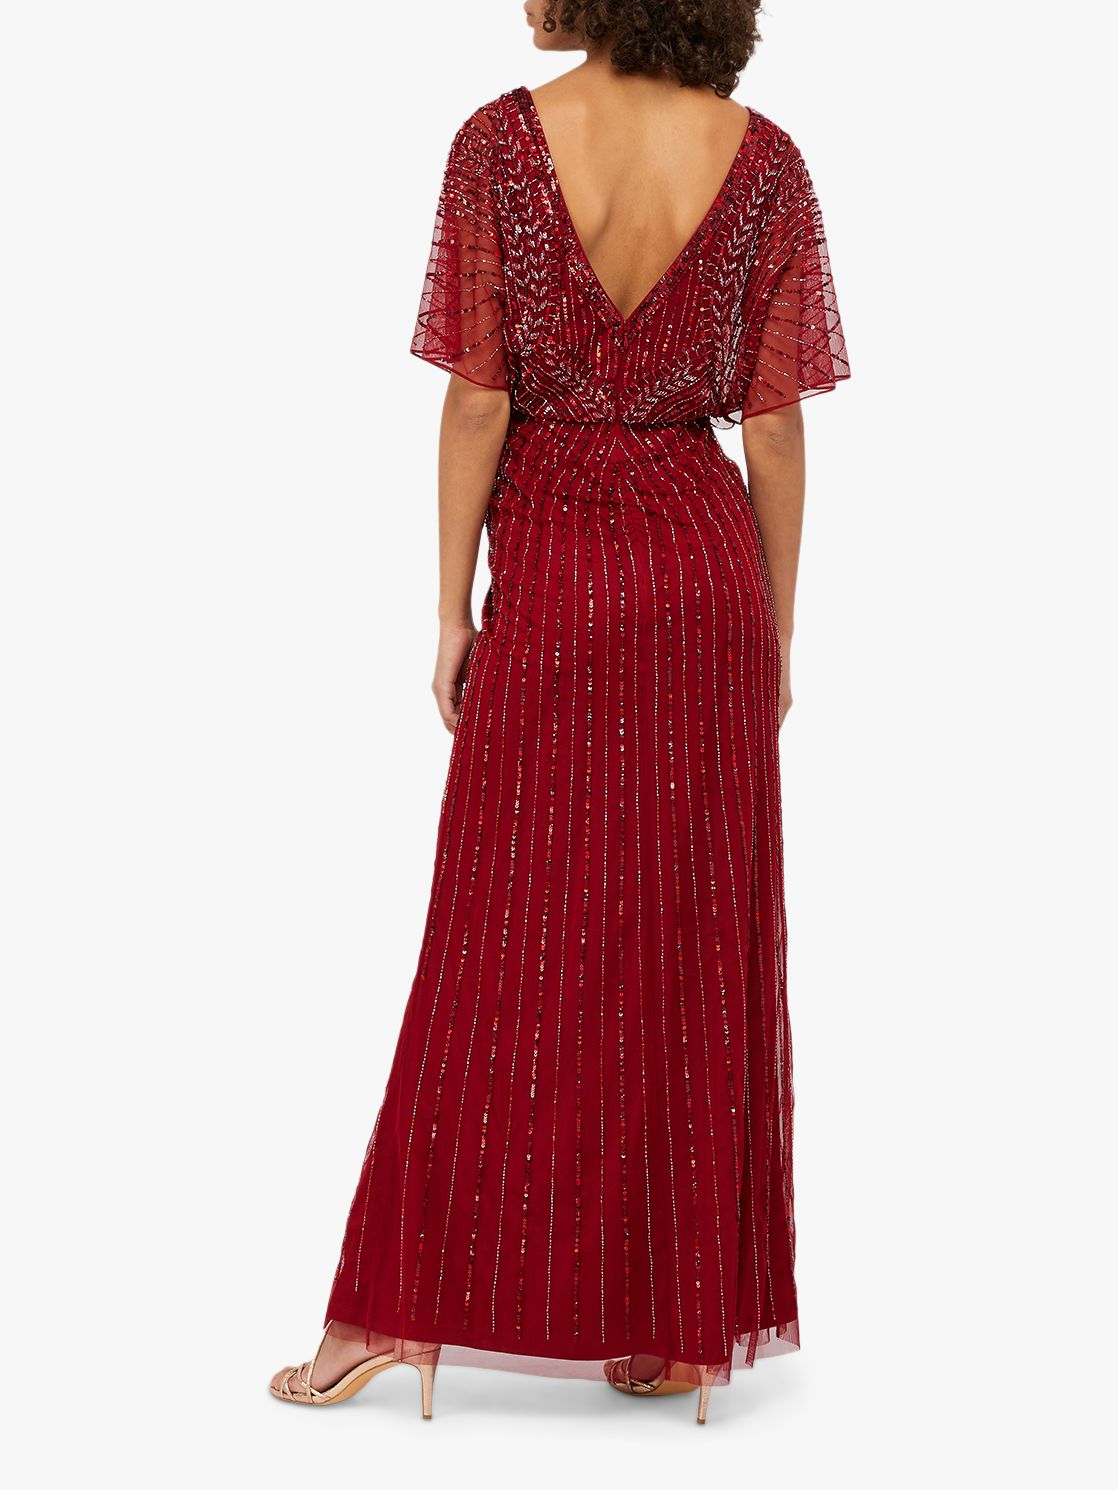 Monsoon Tatiana Embellished Maxi Dress, Red at John Lewis & Partners